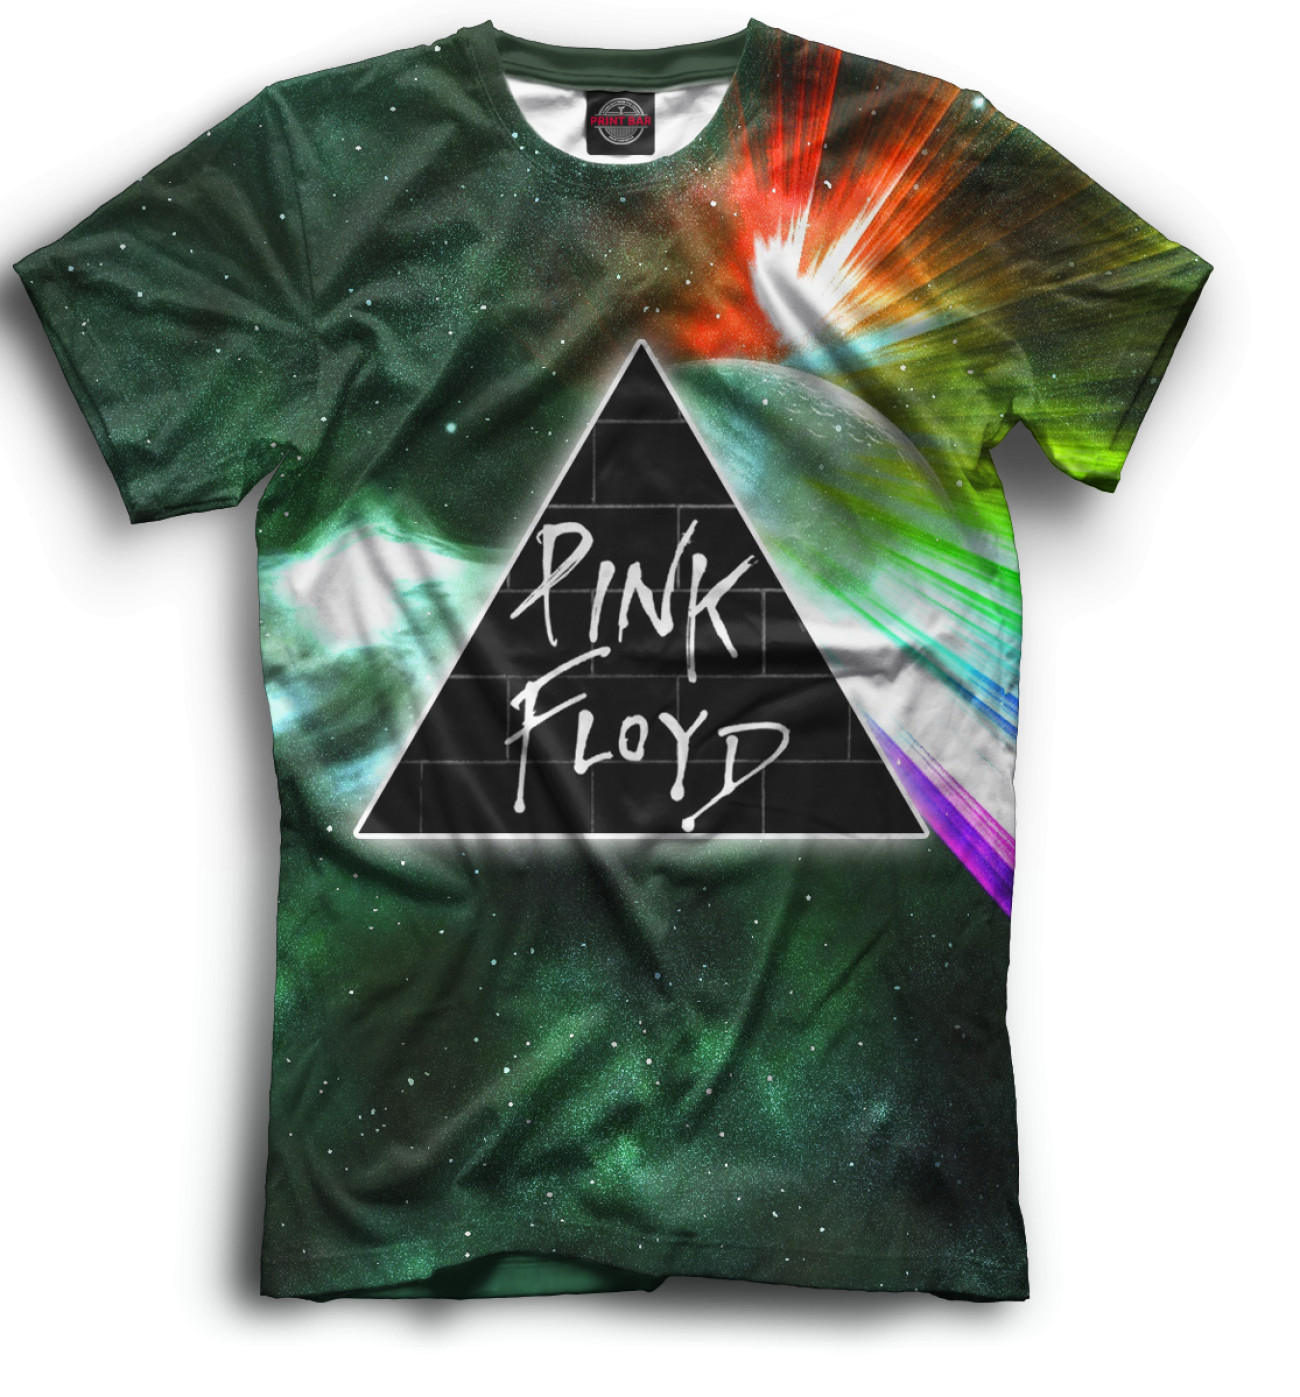 Мужская Футболка Pink Floyd, артикул: PFL-575550-fut-2